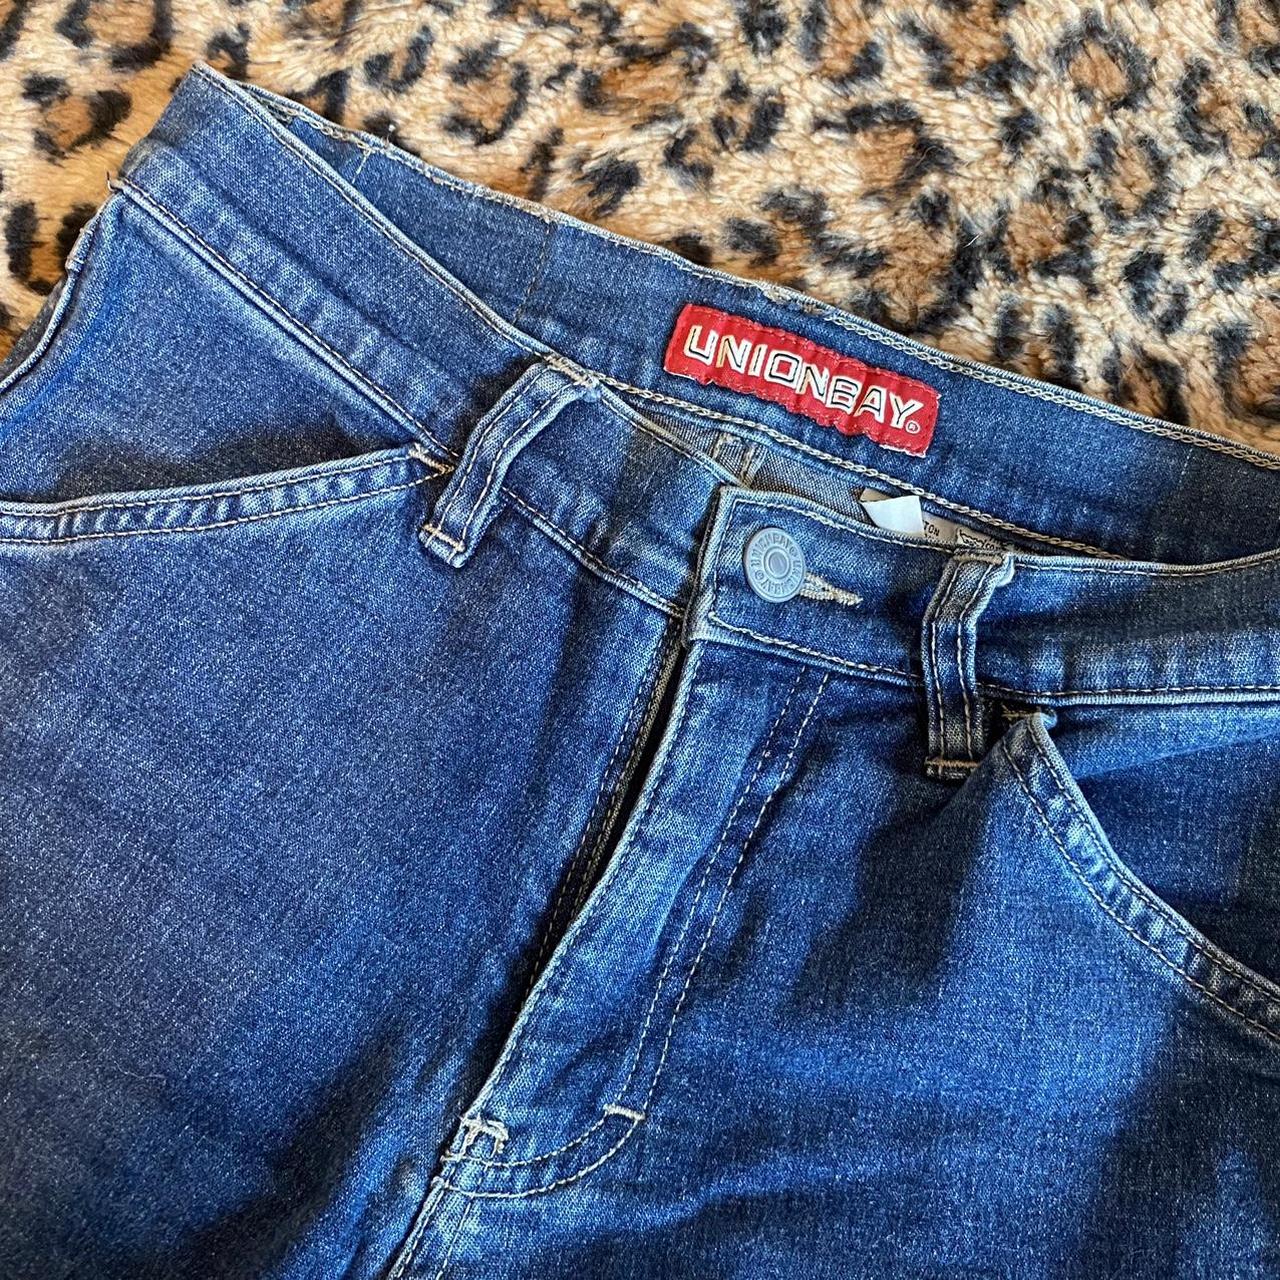 Unionbay flared denim jeans Has stretch - Depop